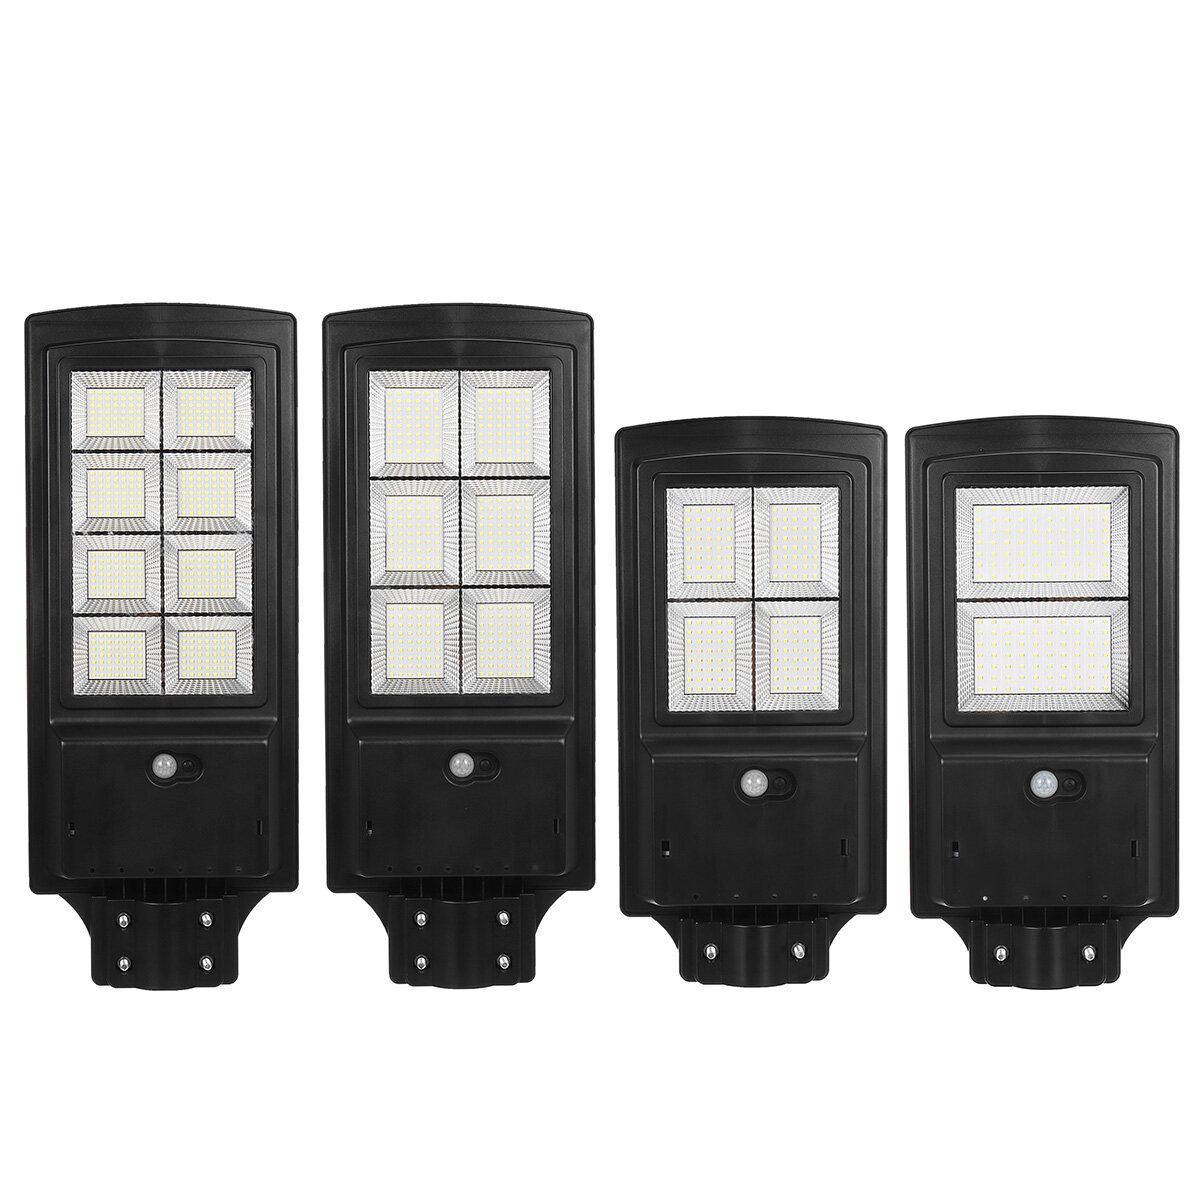 140/160/324 / 392LED Solarbetriebene LED-Straßenlaterne PIR Bewegungsmelder Wandleuchte + Fernbedienung